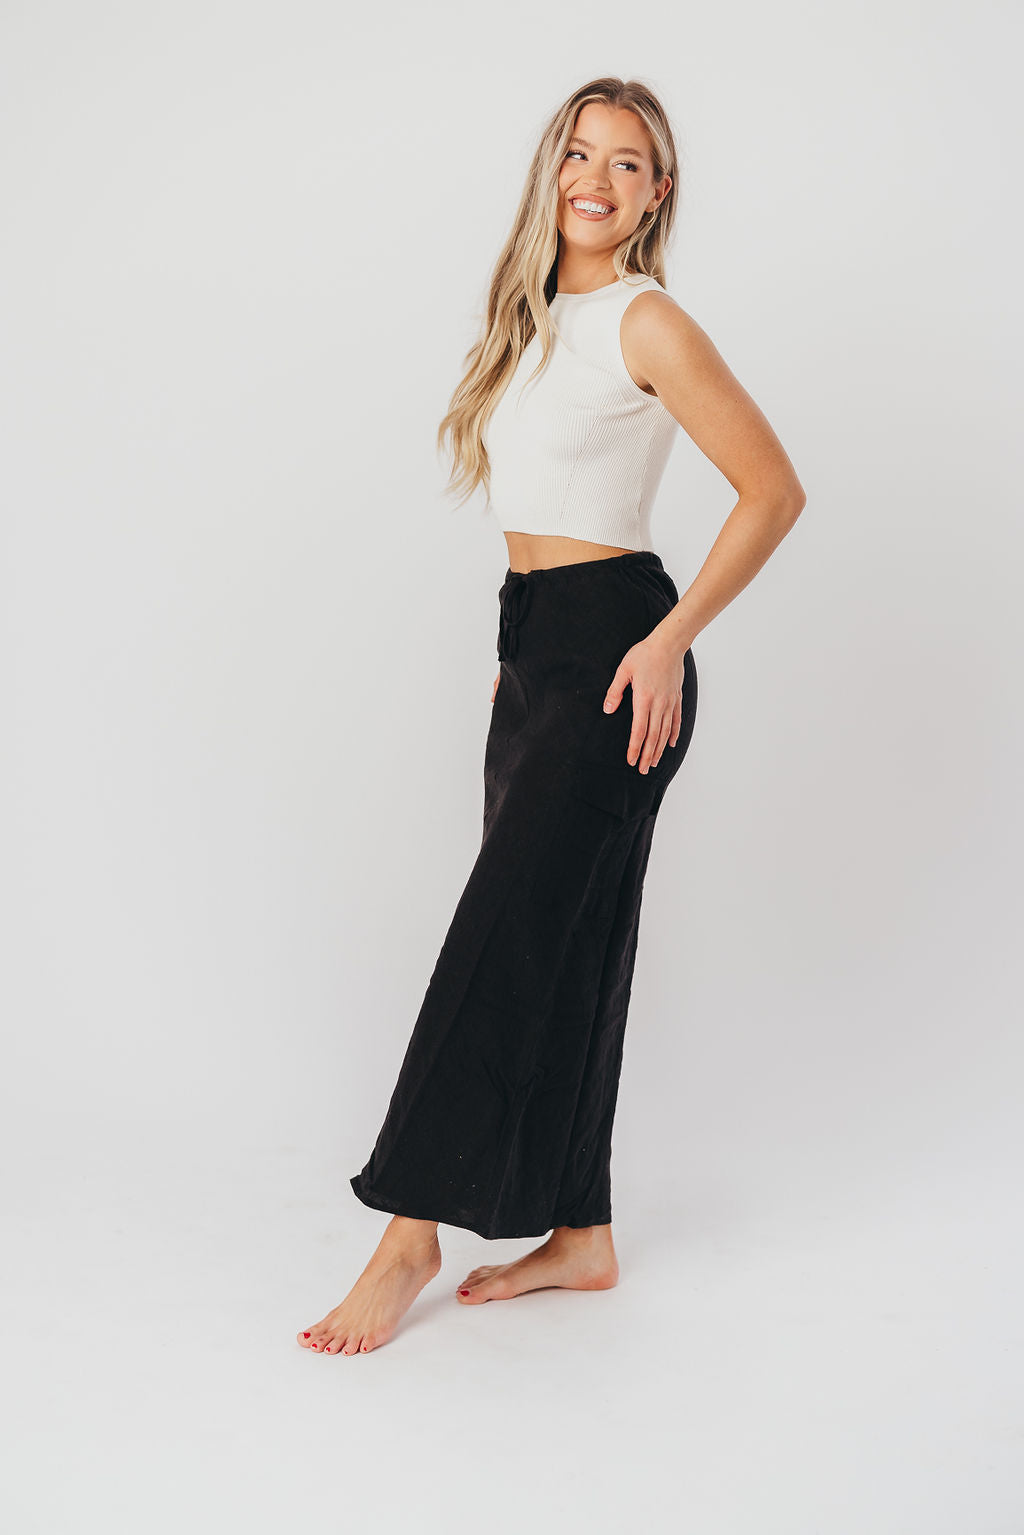 Farrah Linen Maxi Skirt in Black